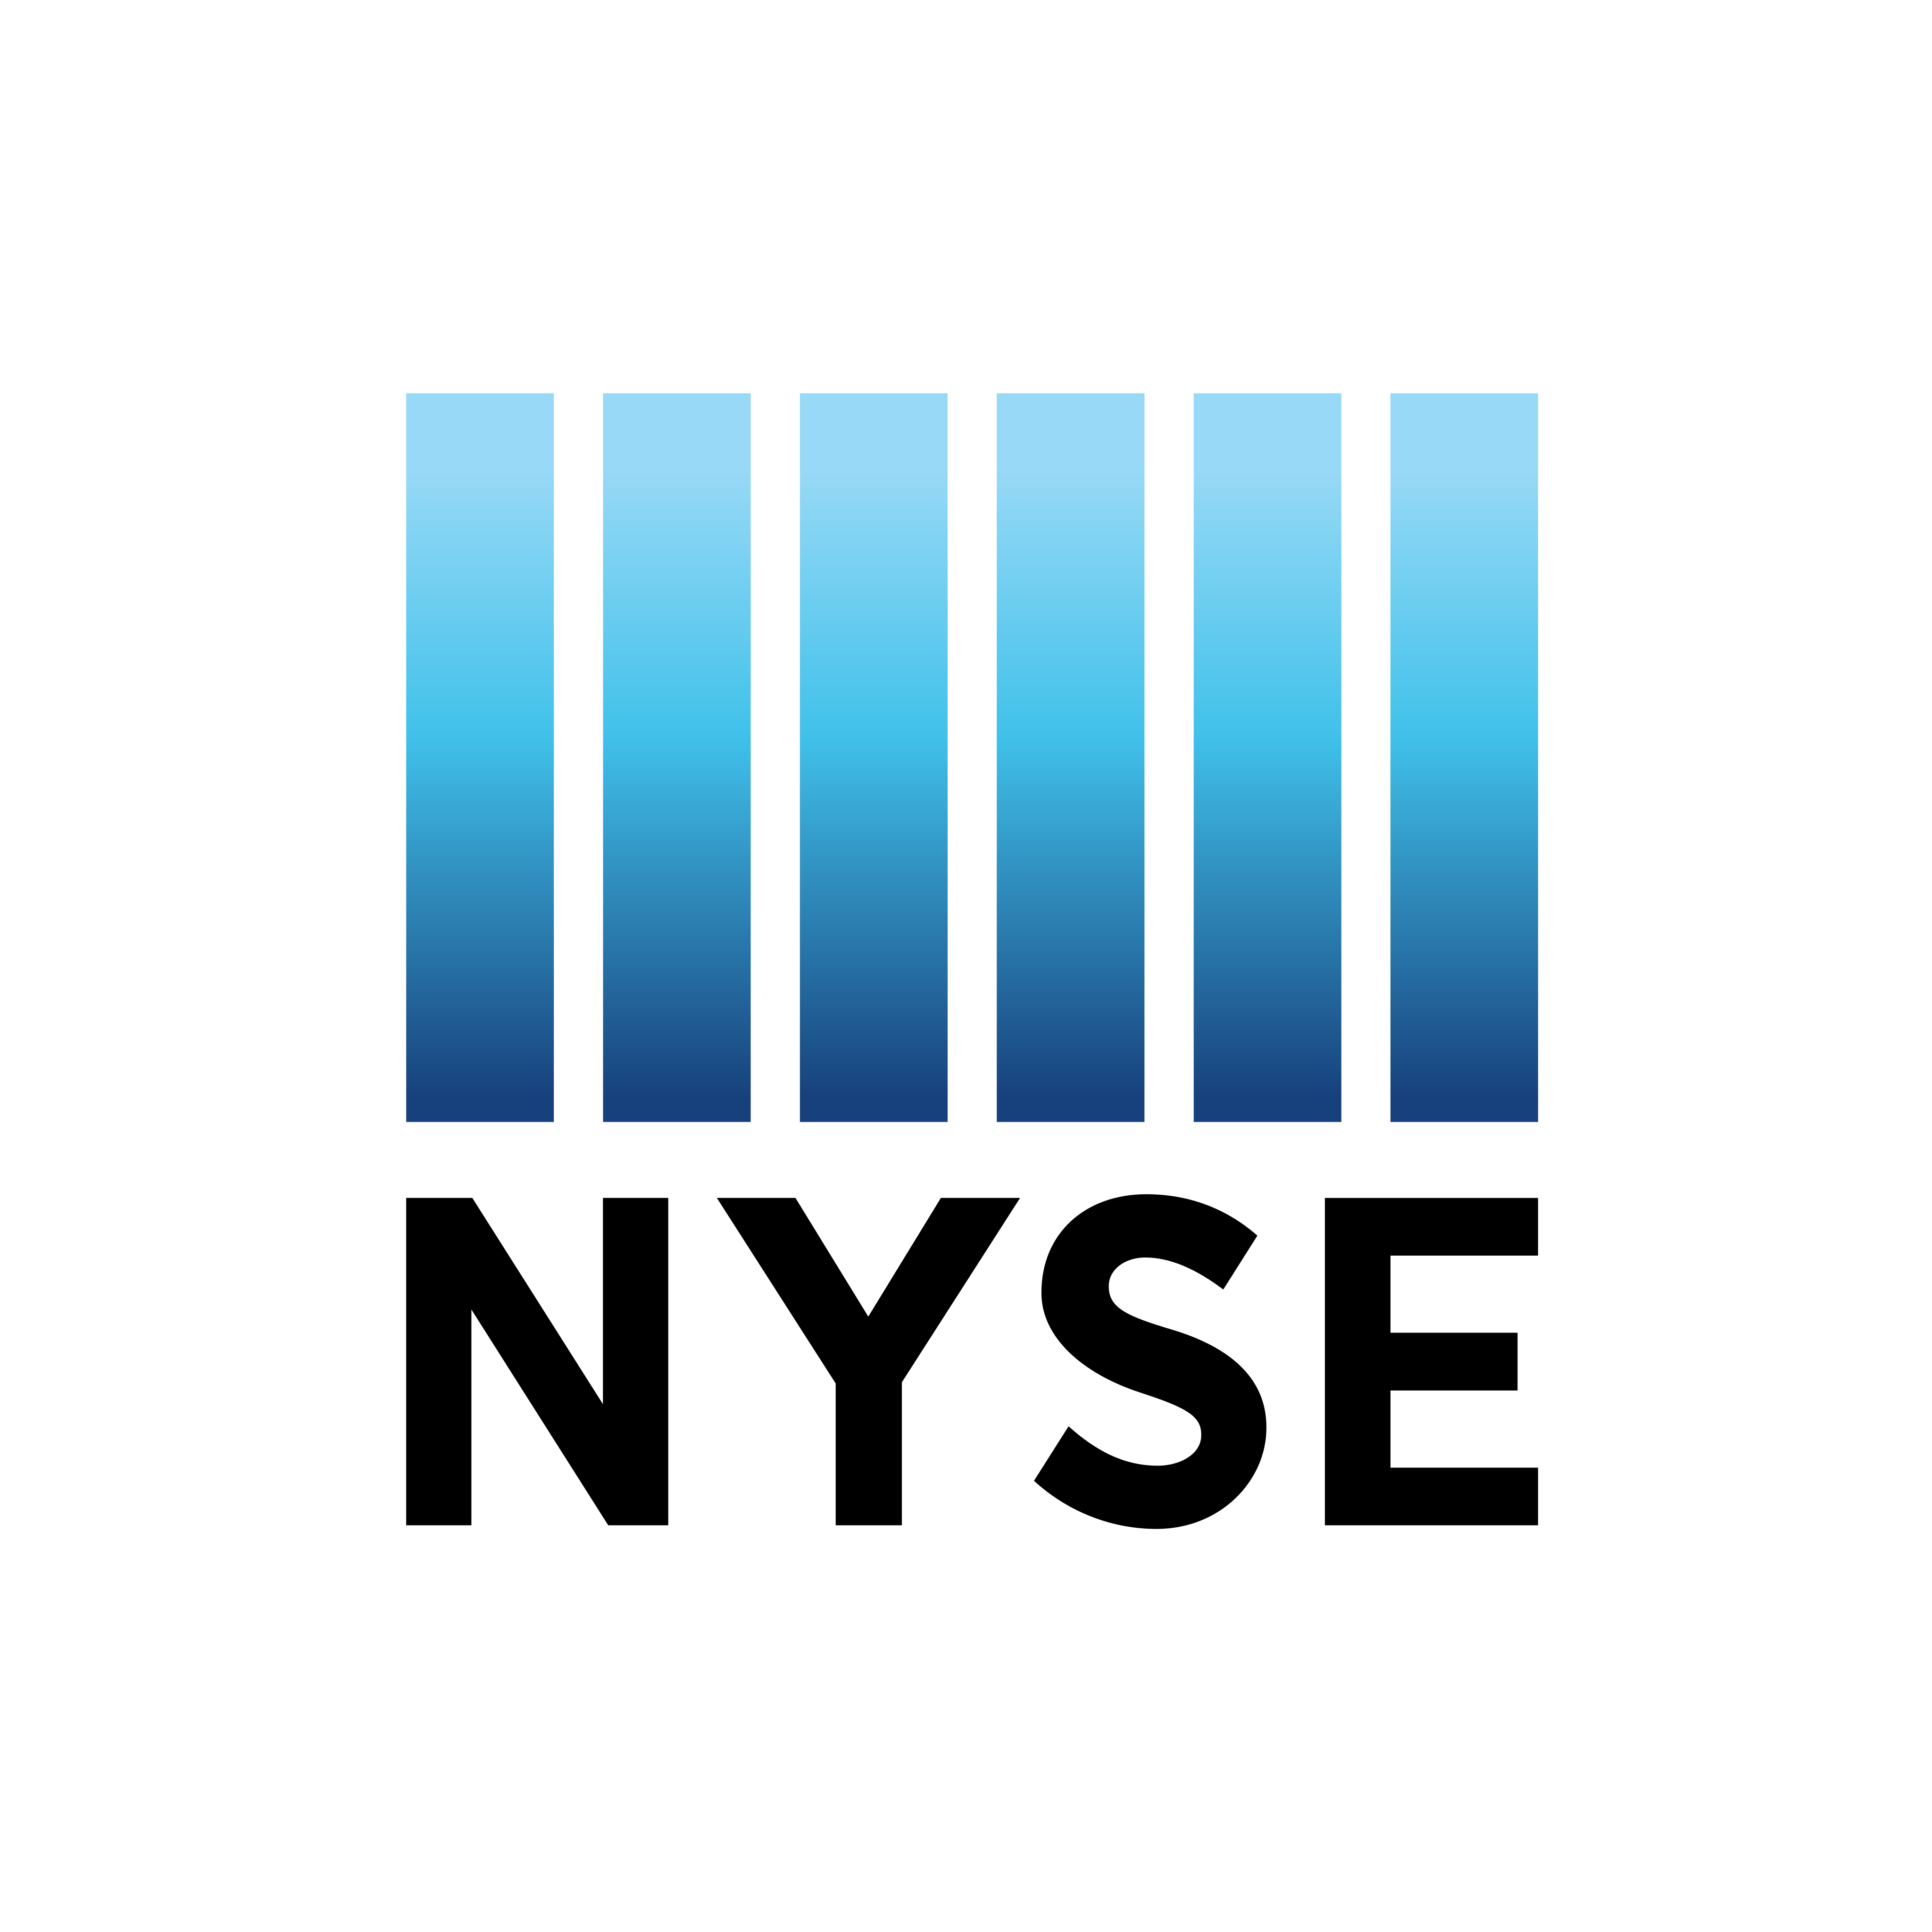 nyse logo 0 - NYSE Logo - New York Stock Exchange